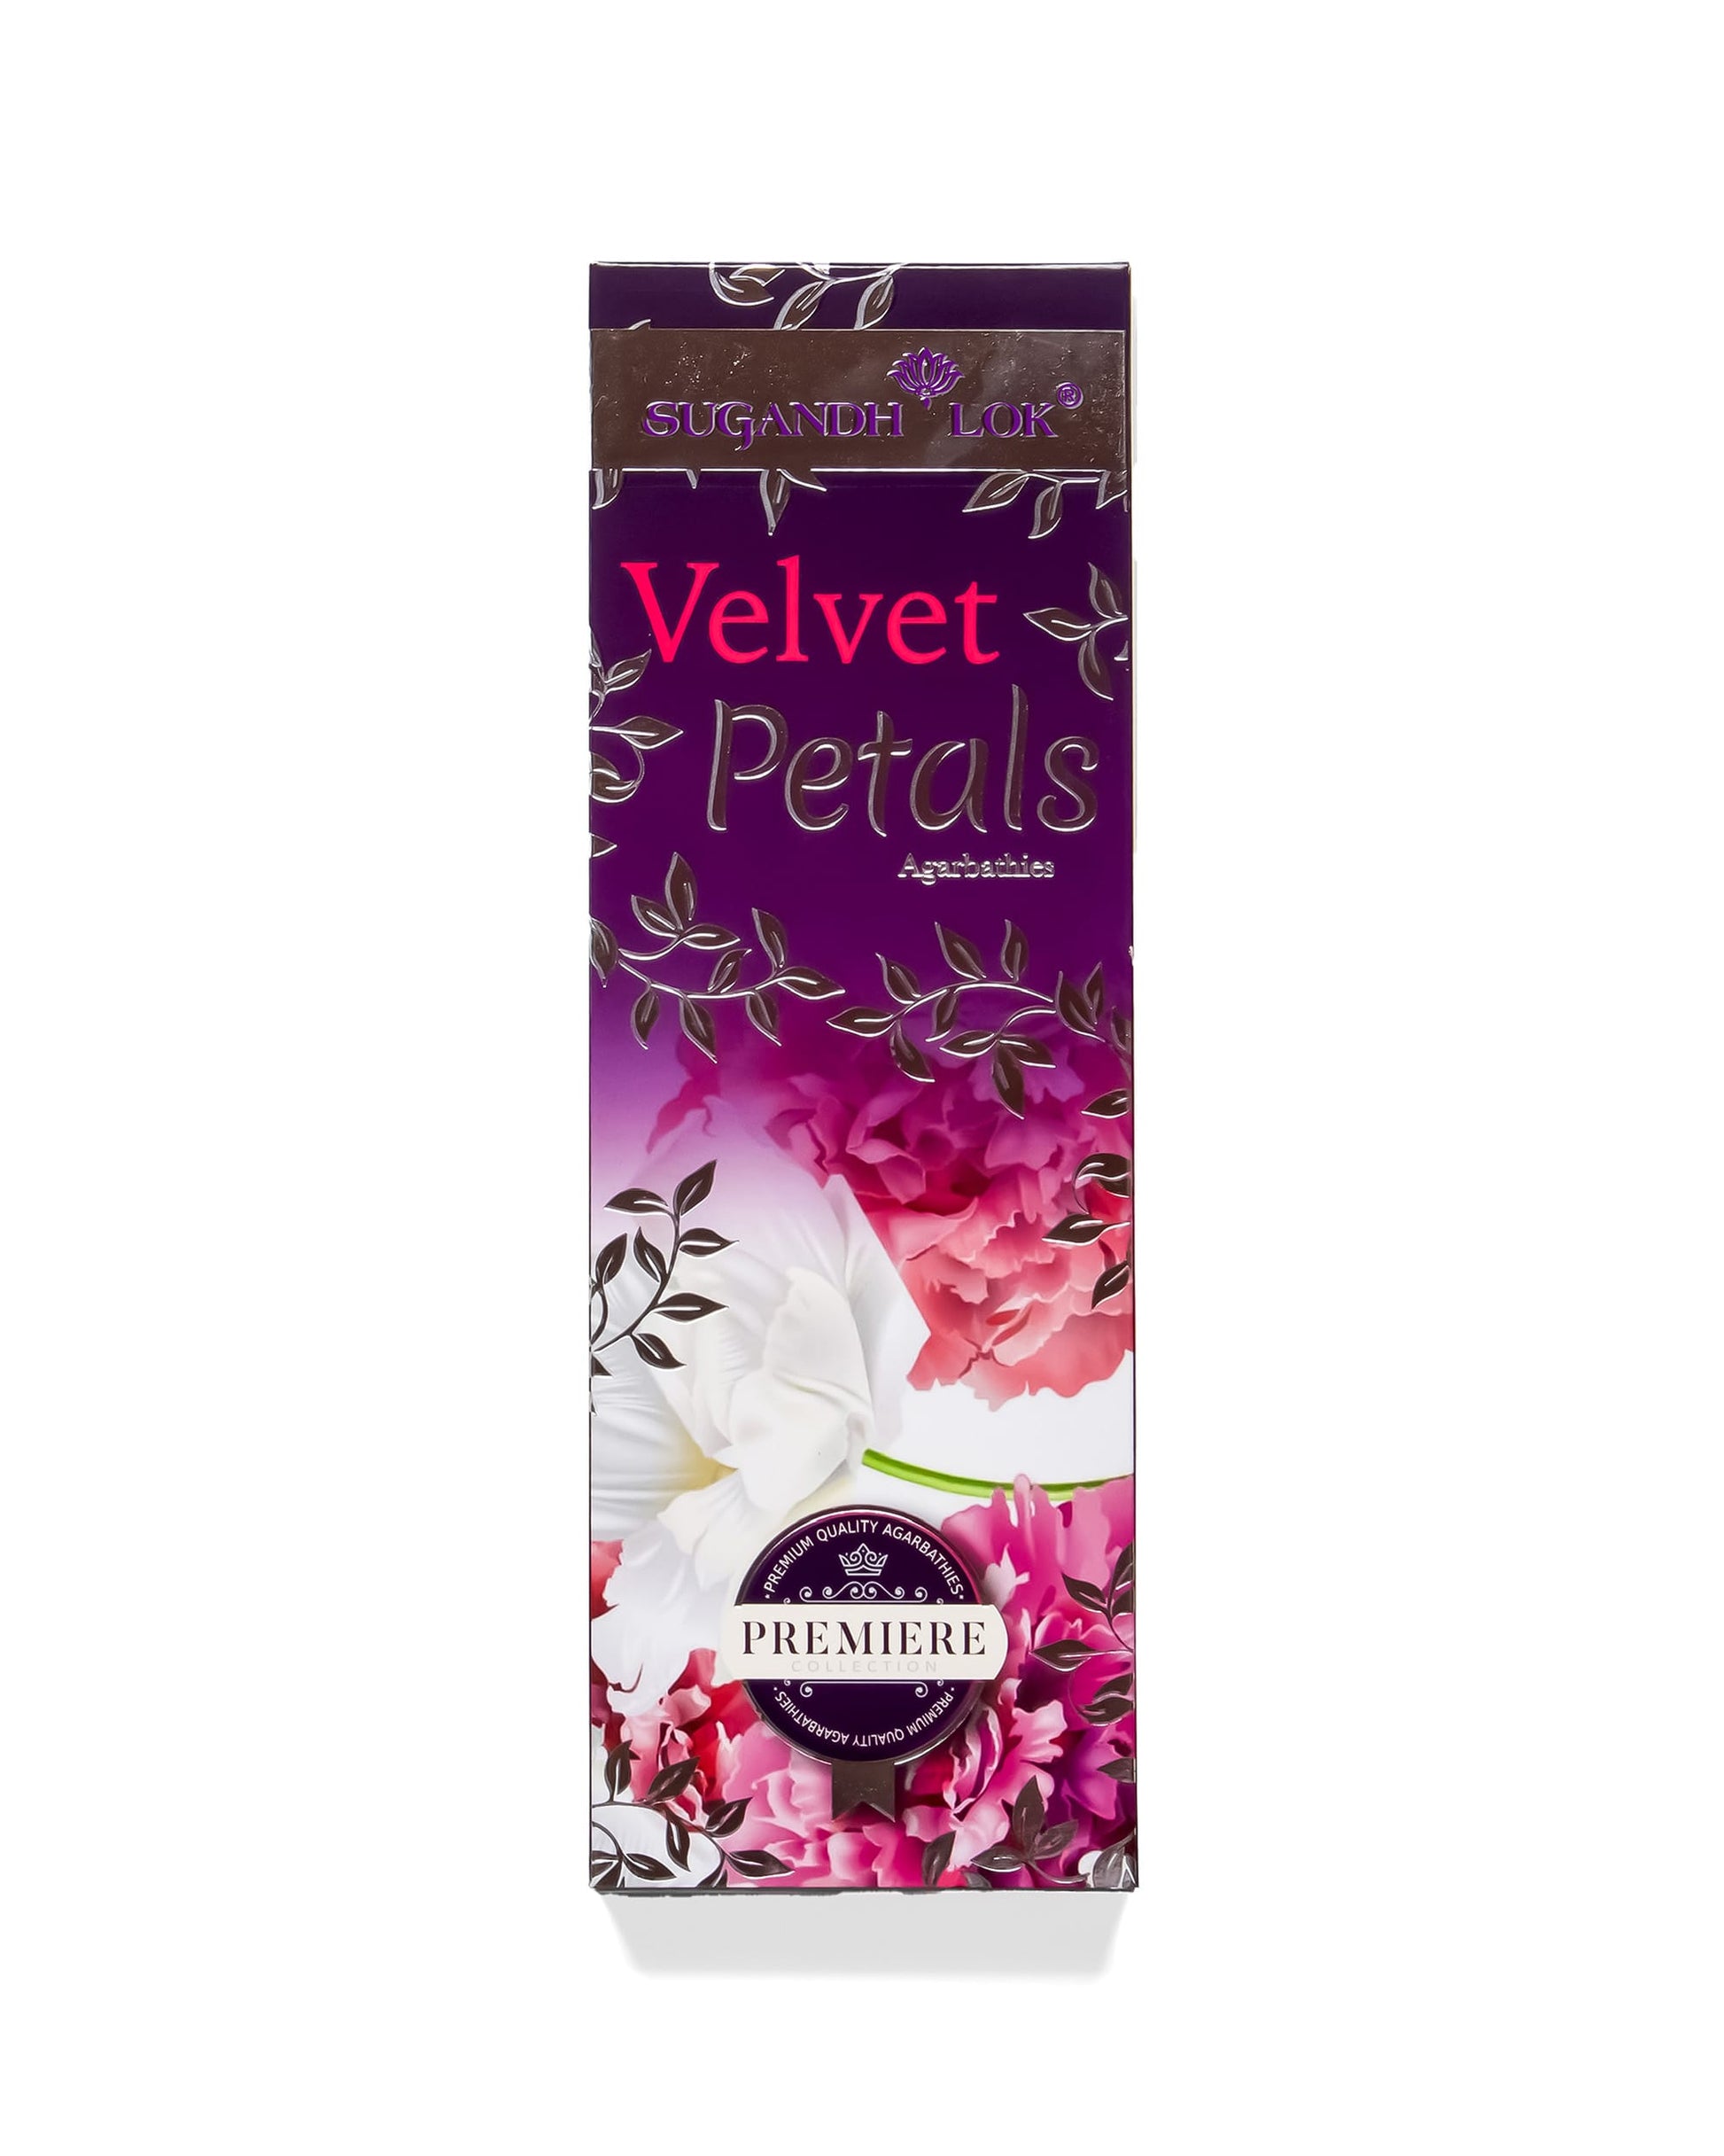 Velvet Petals Agarbatti Pack - Premiere Collection by SugandhLok